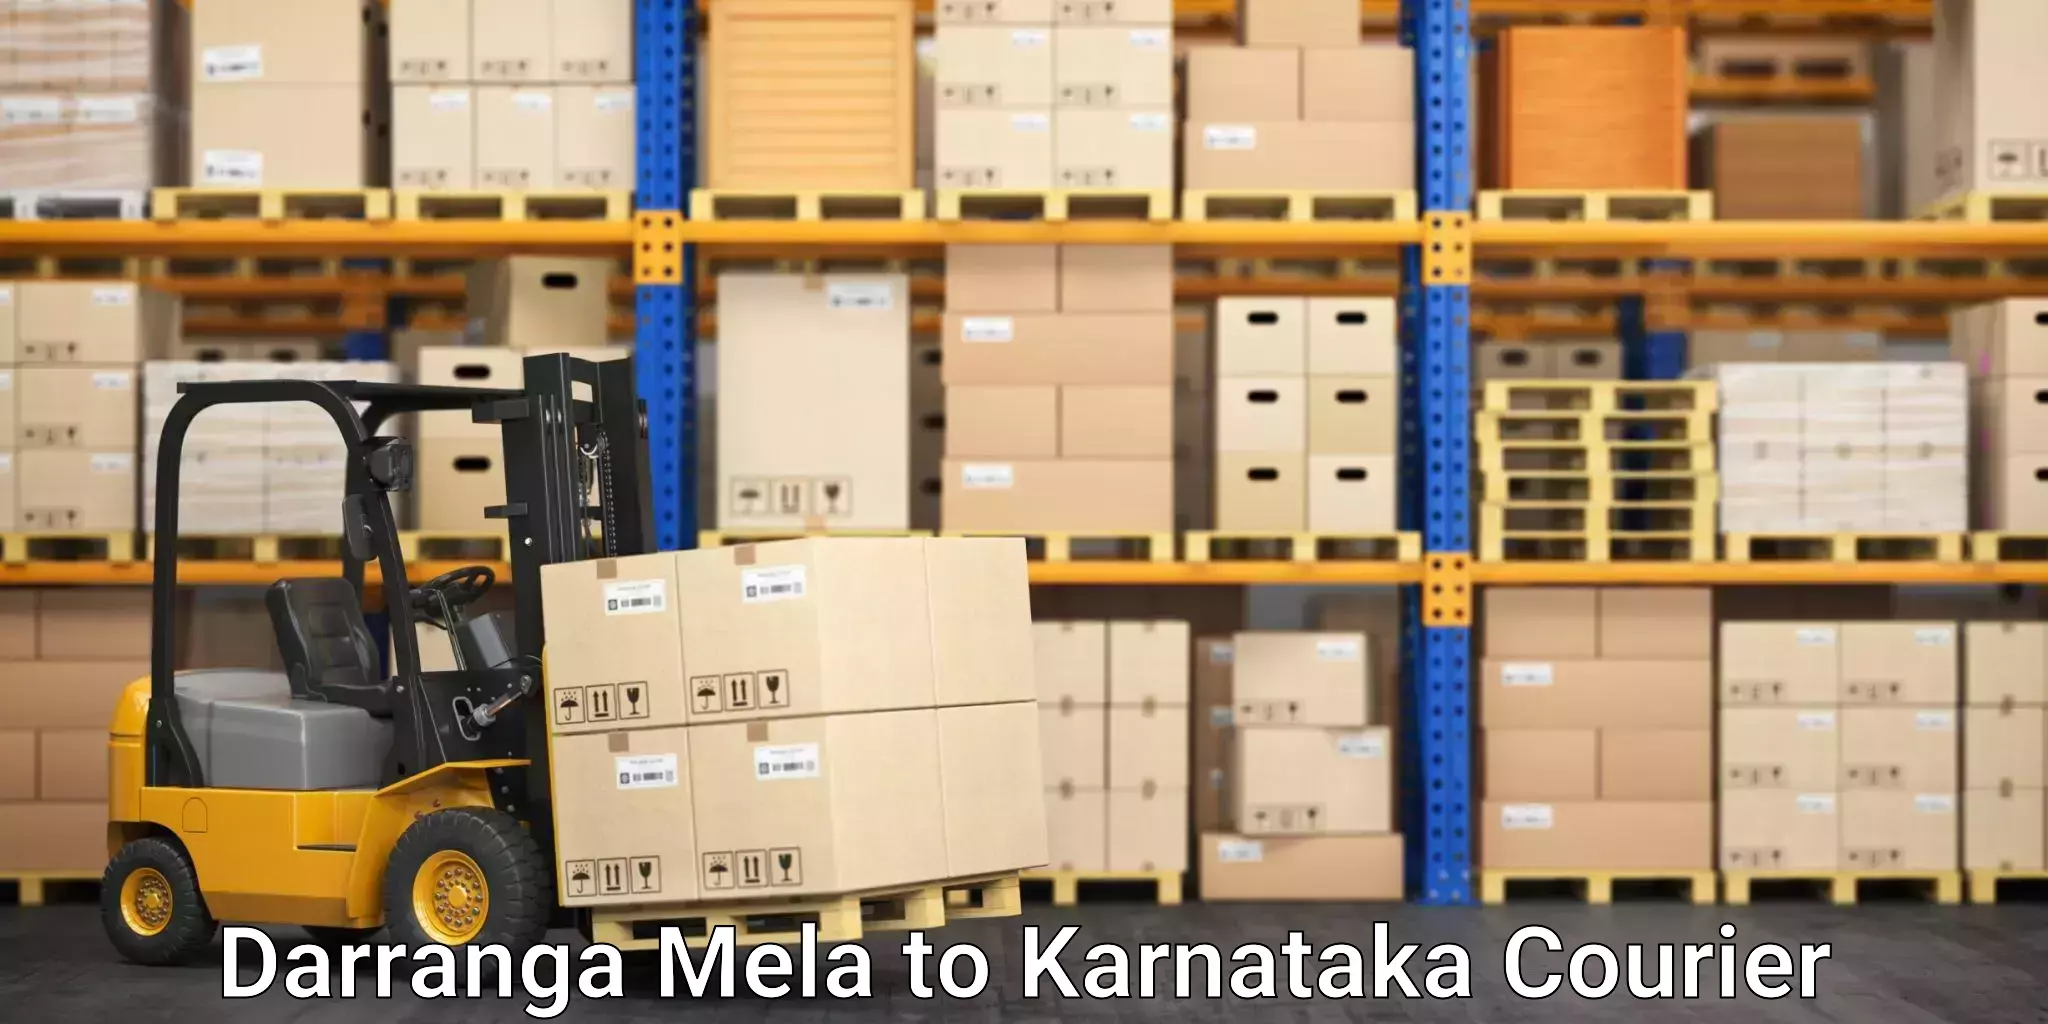 24-hour delivery options Darranga Mela to Karnataka